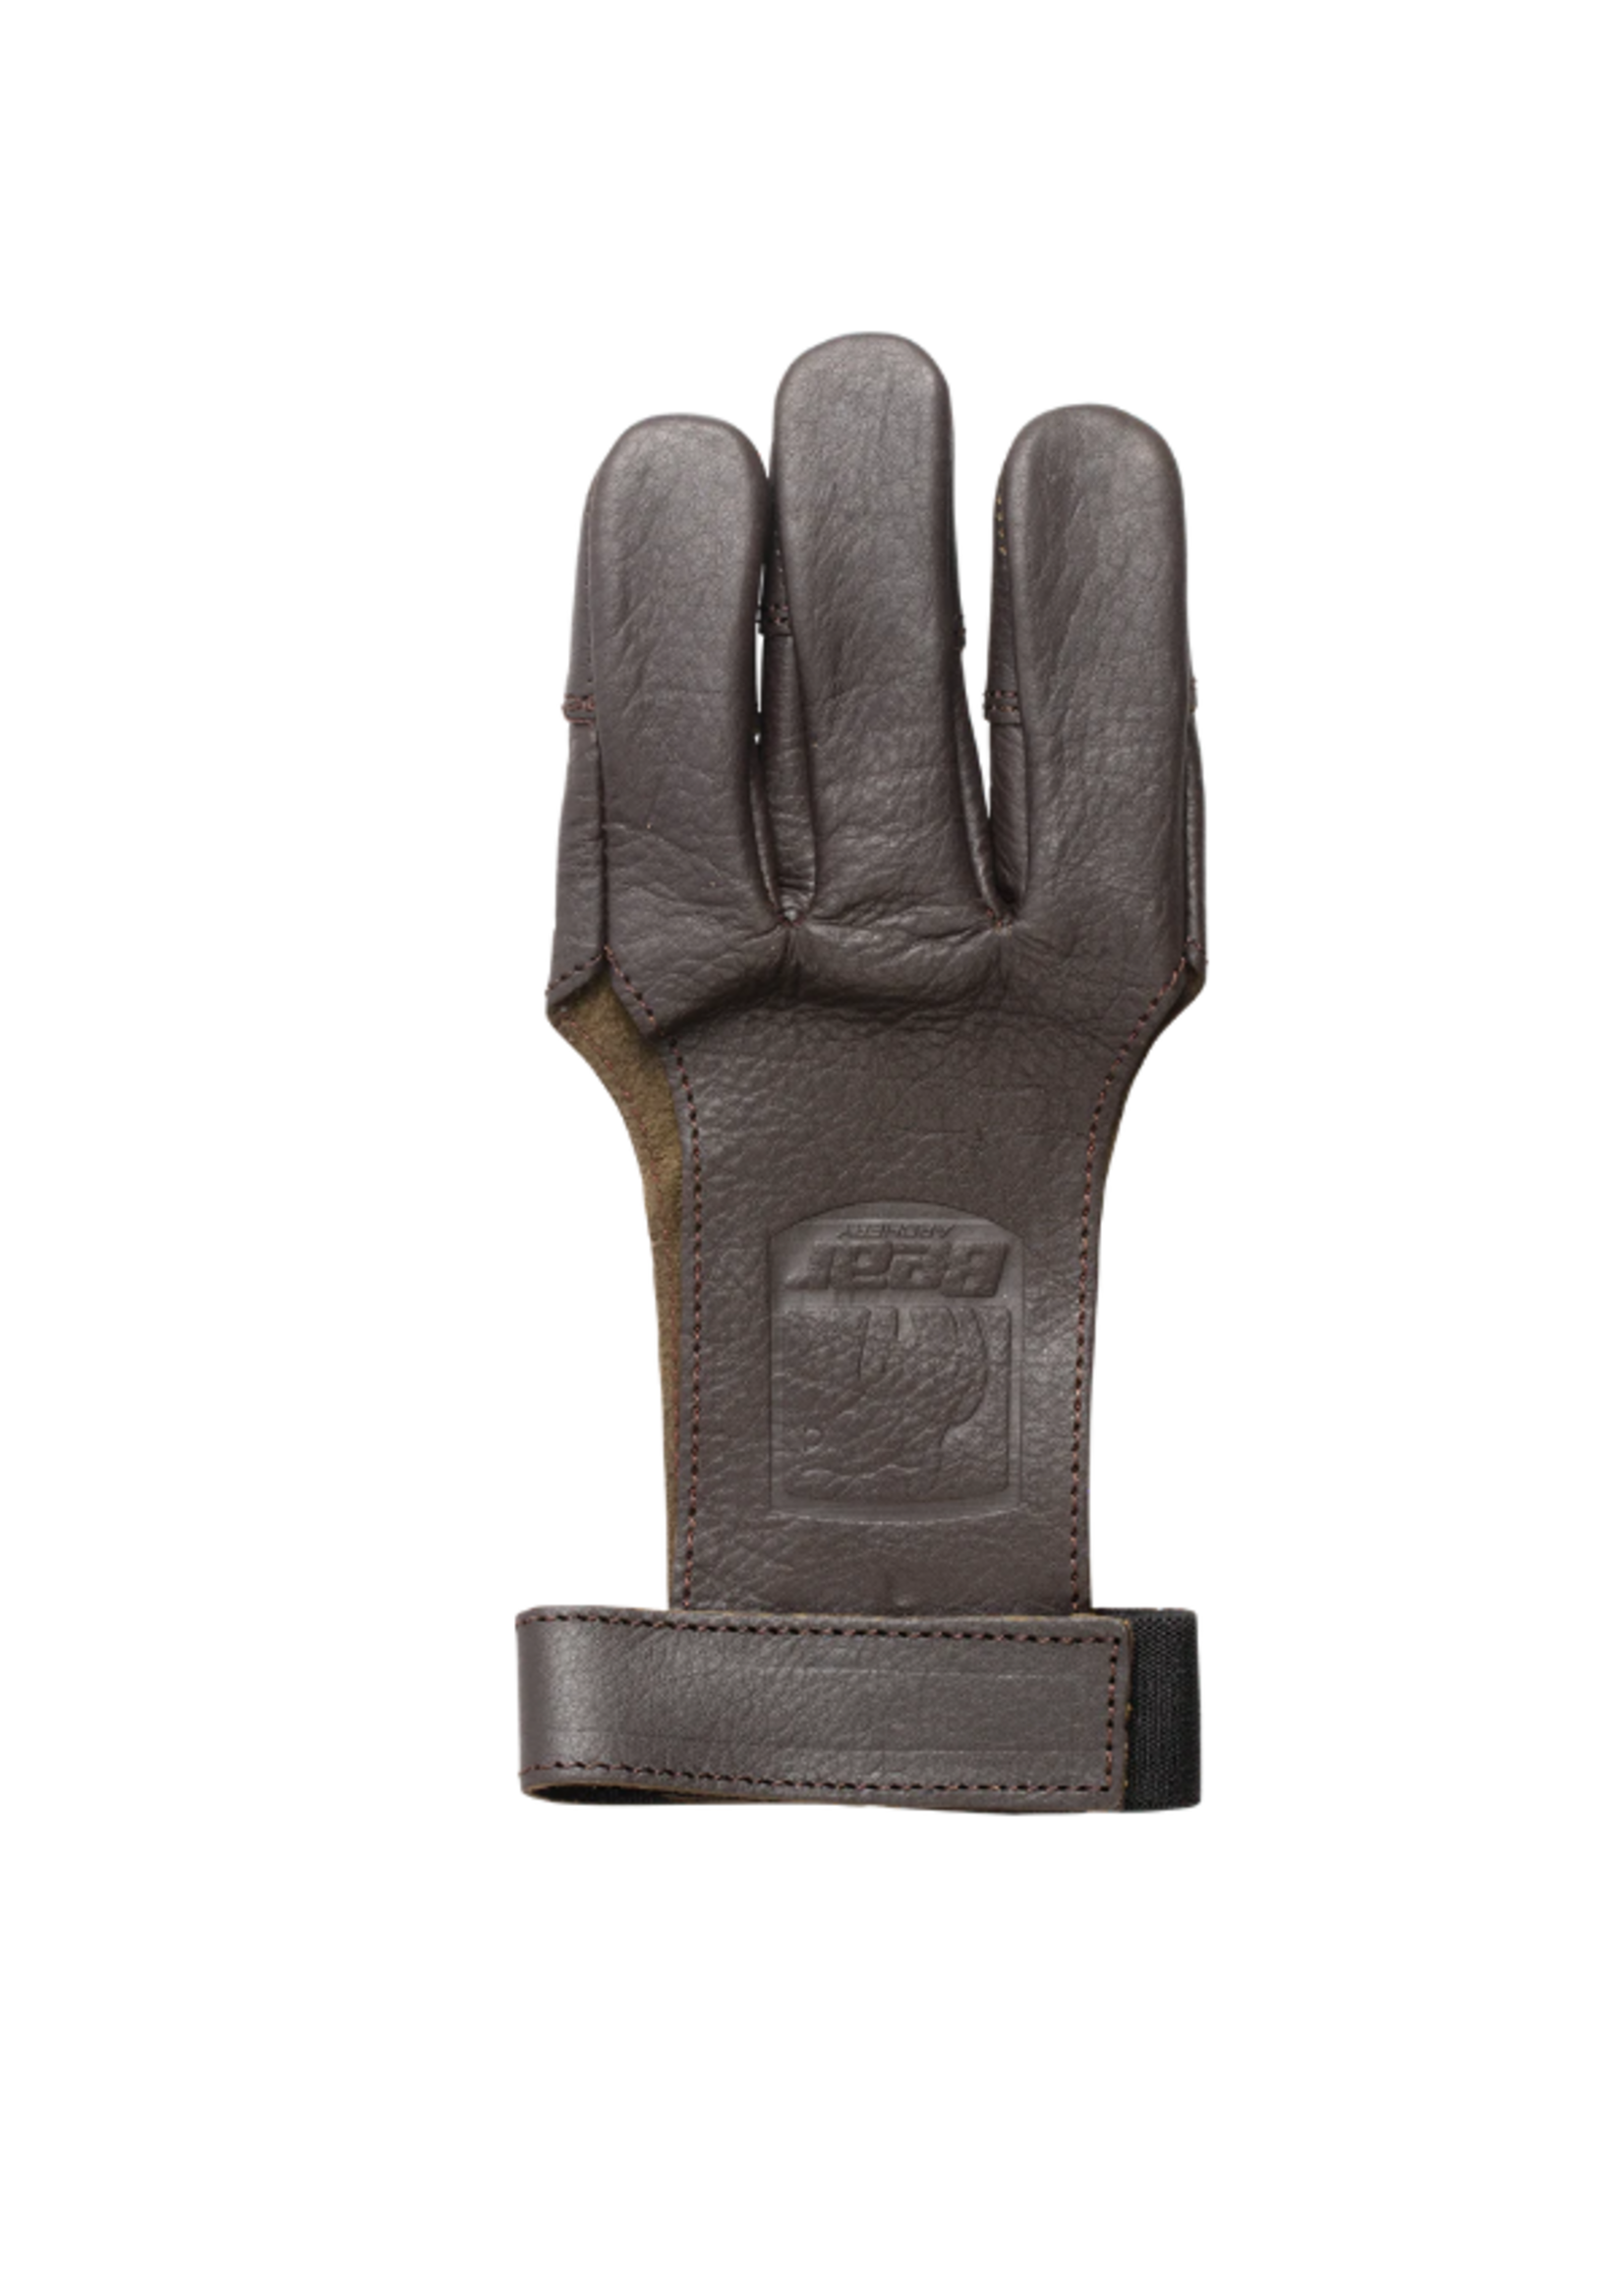 Bear Archery Leather 3 Finger Shooting Glove - Medium